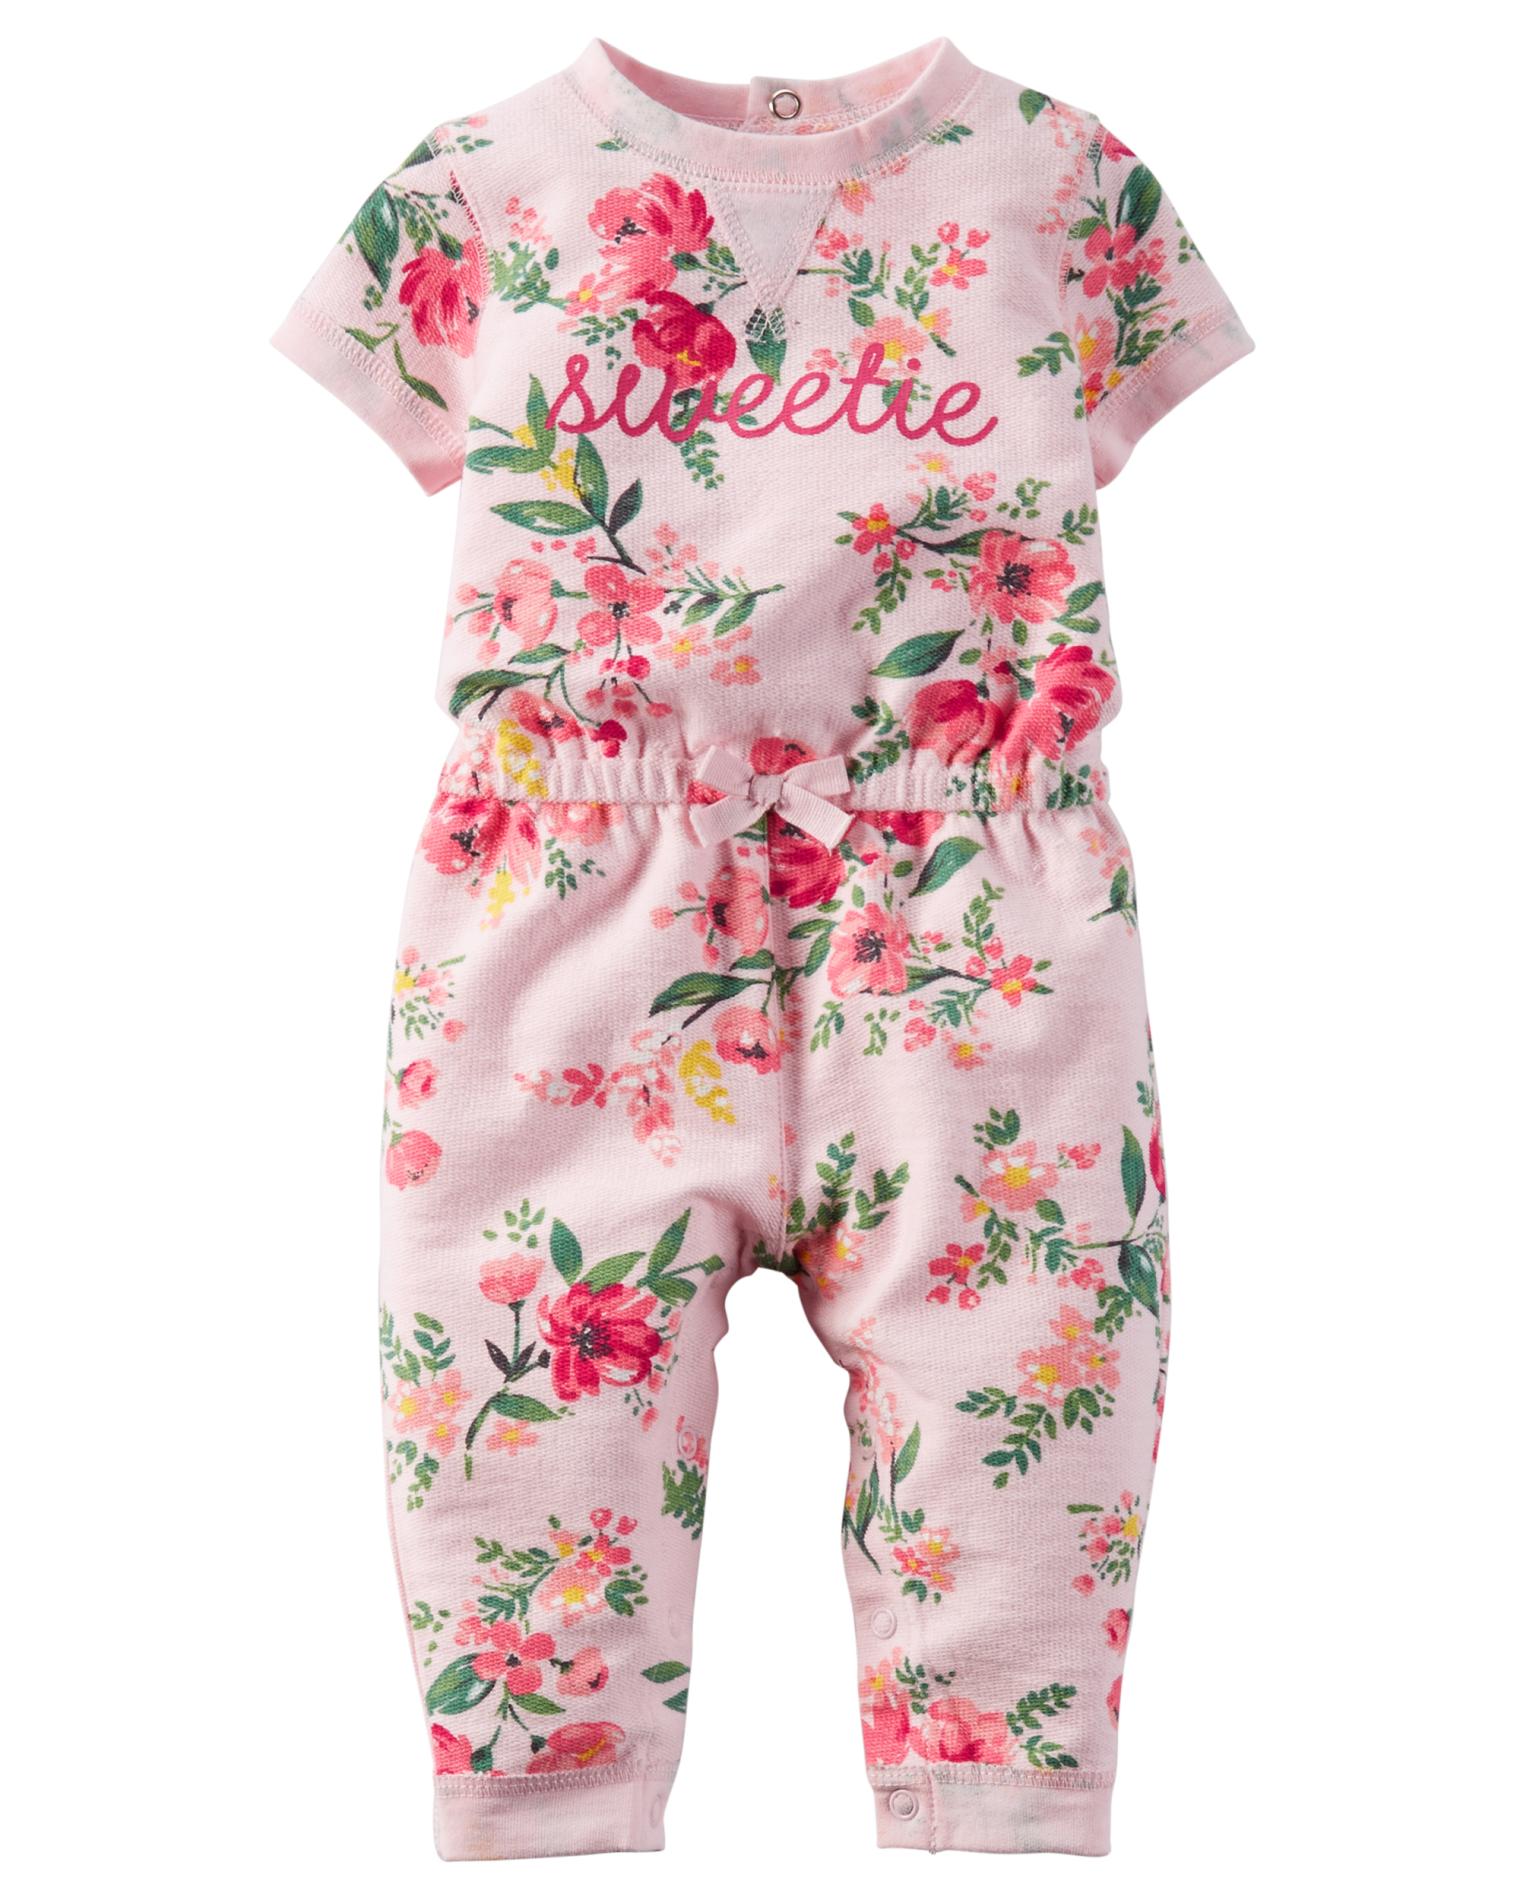 Carter's Newborn & Infant Girls' Jumpsuit - Floral Sweetie